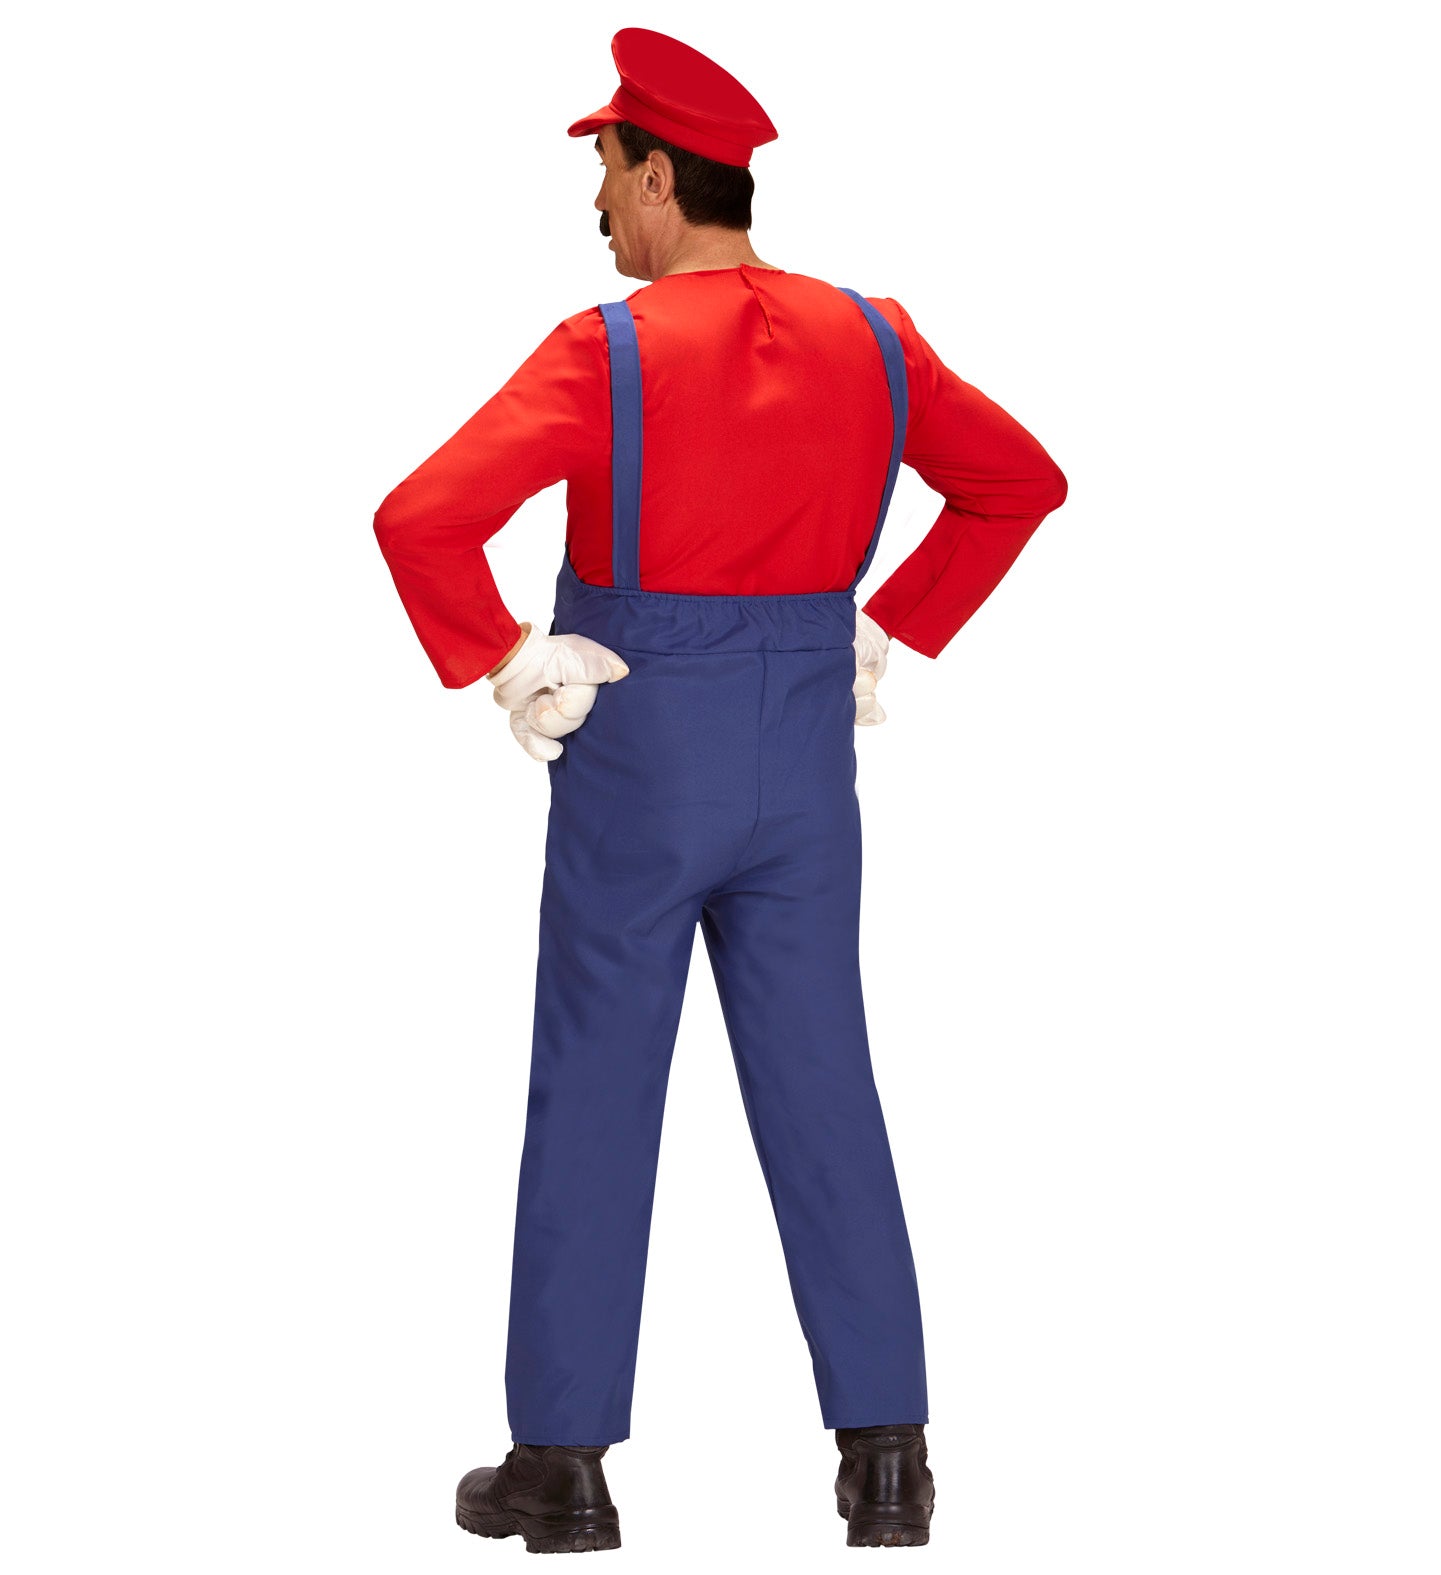 Super Plumber Mario Red Costume rear